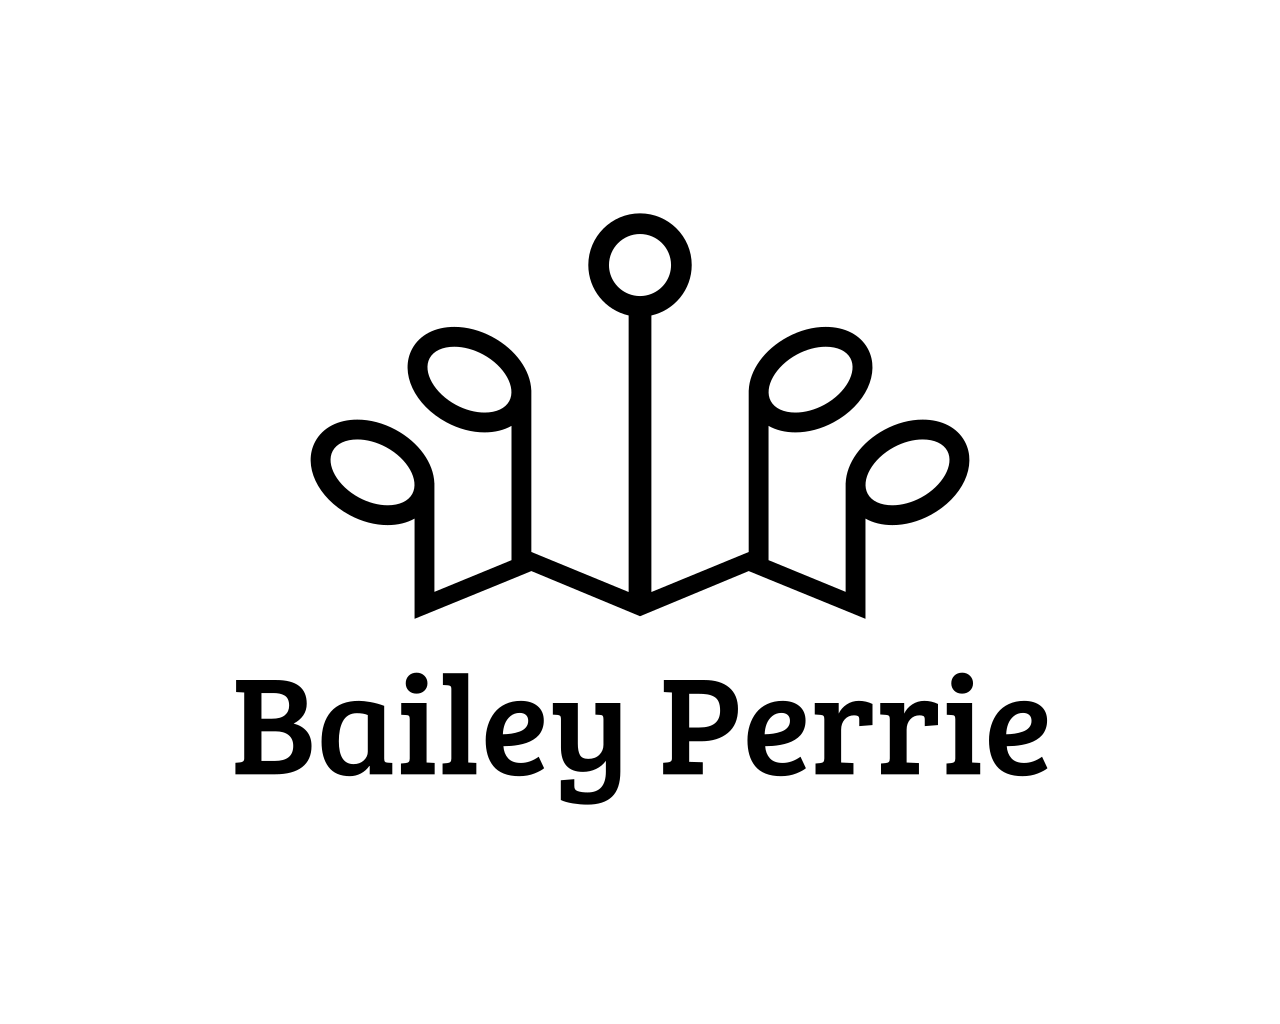 Bailey Perrie